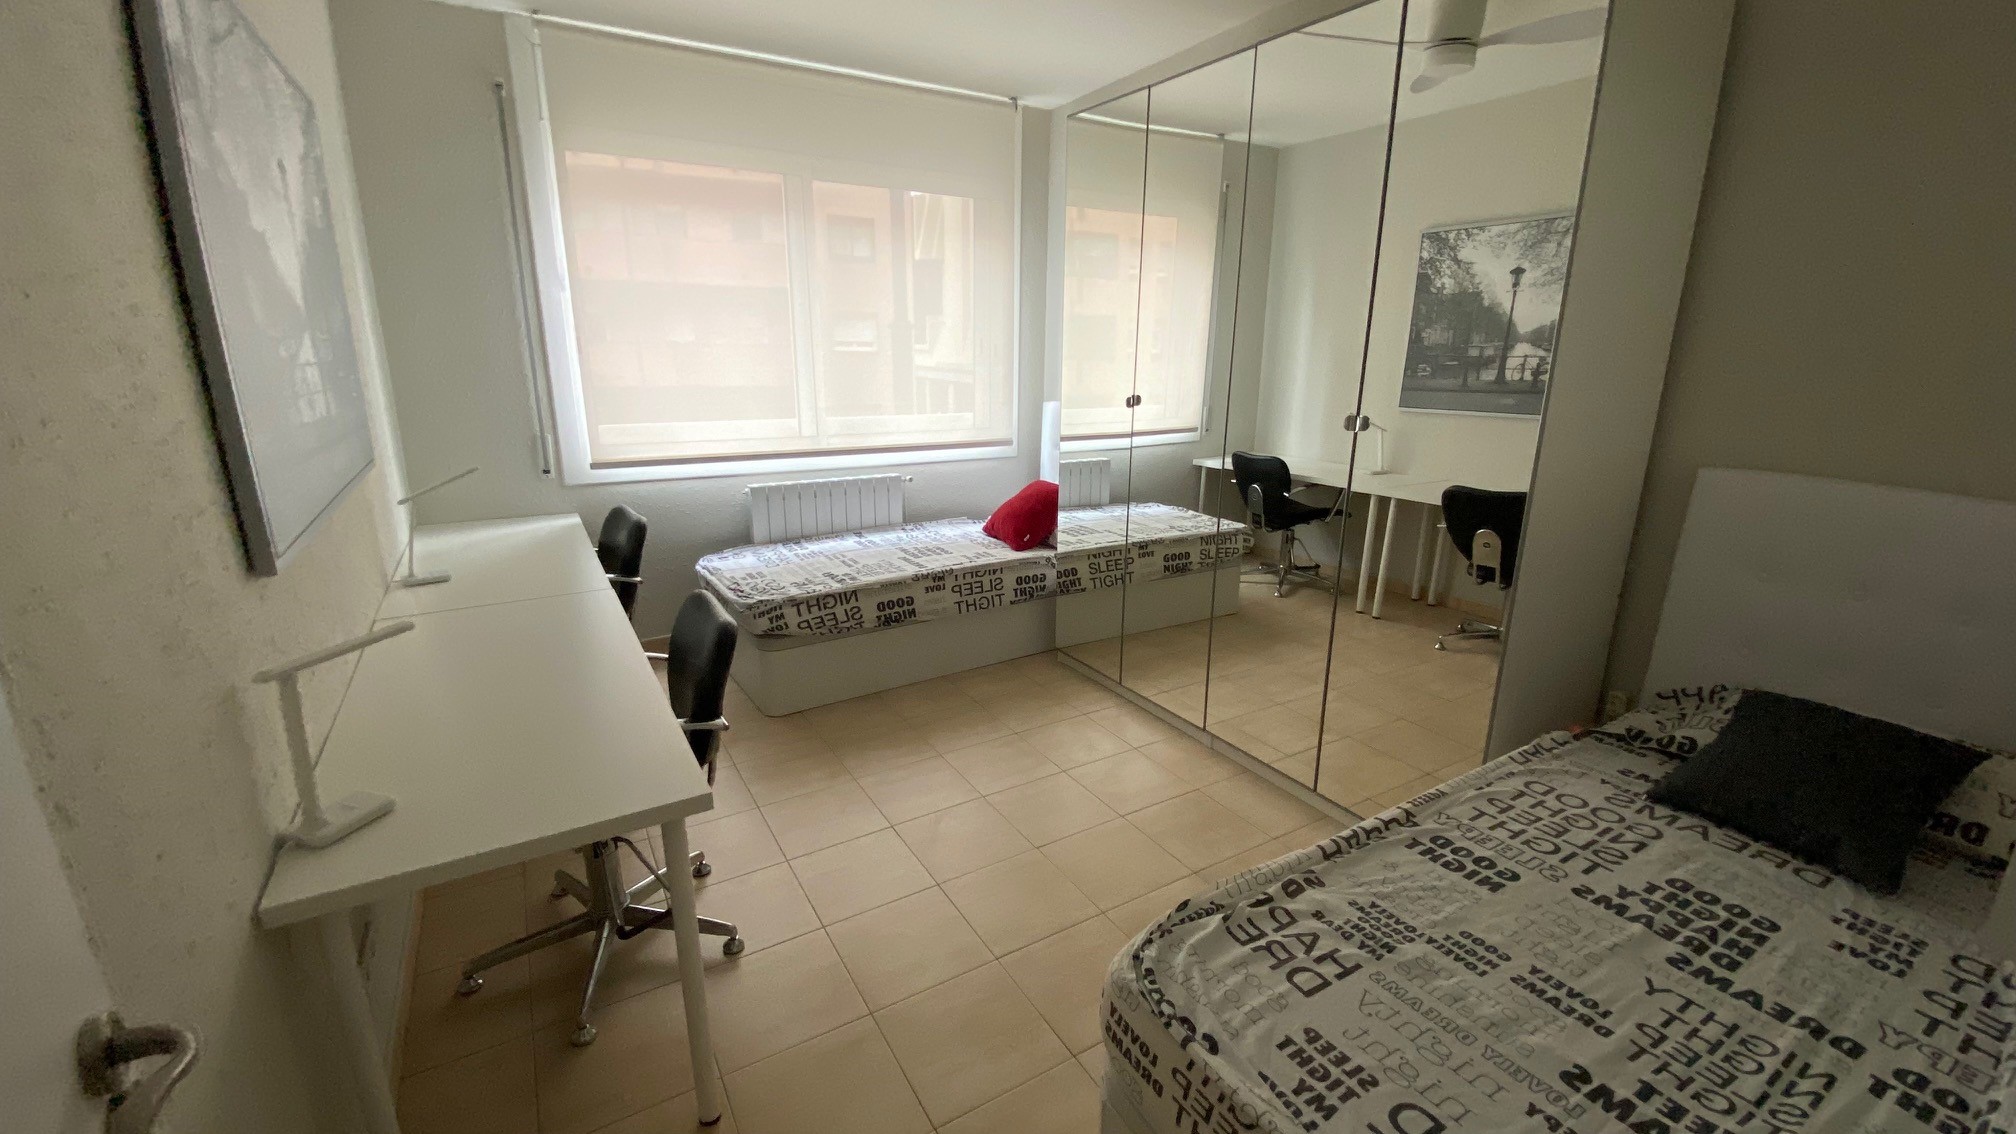 Código 1017697 – Copenhague.  Habitación indivual o doble con baño privado en piso de estudiantes nuevo a estrenar. Sabadell bien comunicado. Creu Alta